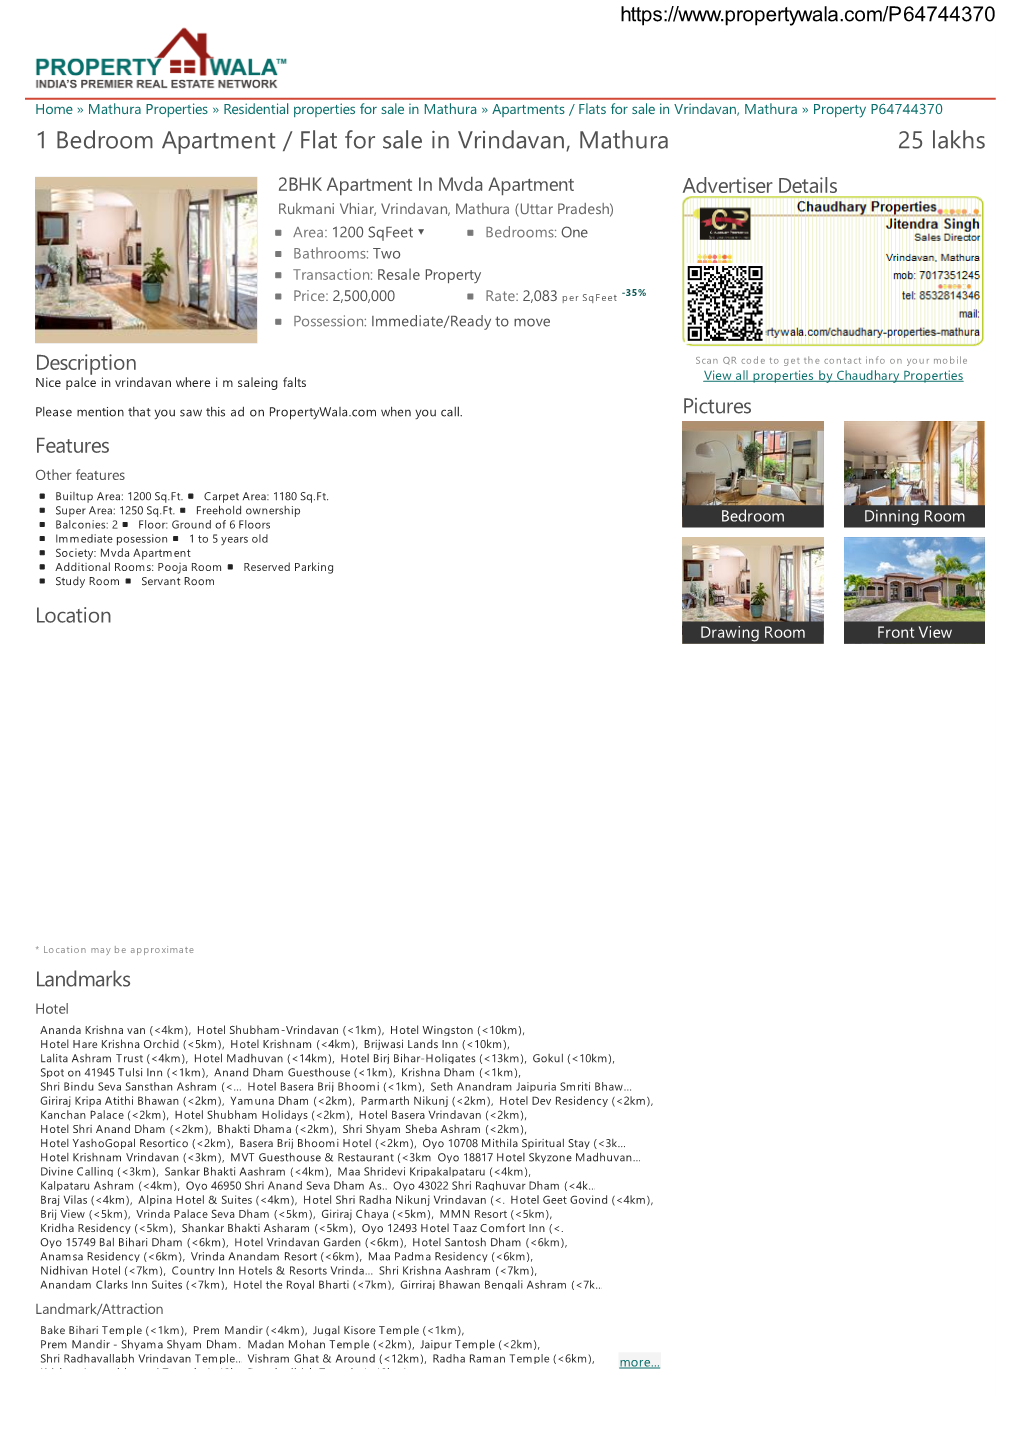 1 Bedroom Apartment / Flat for Sale in Vrindavan, Mathura (P64744370